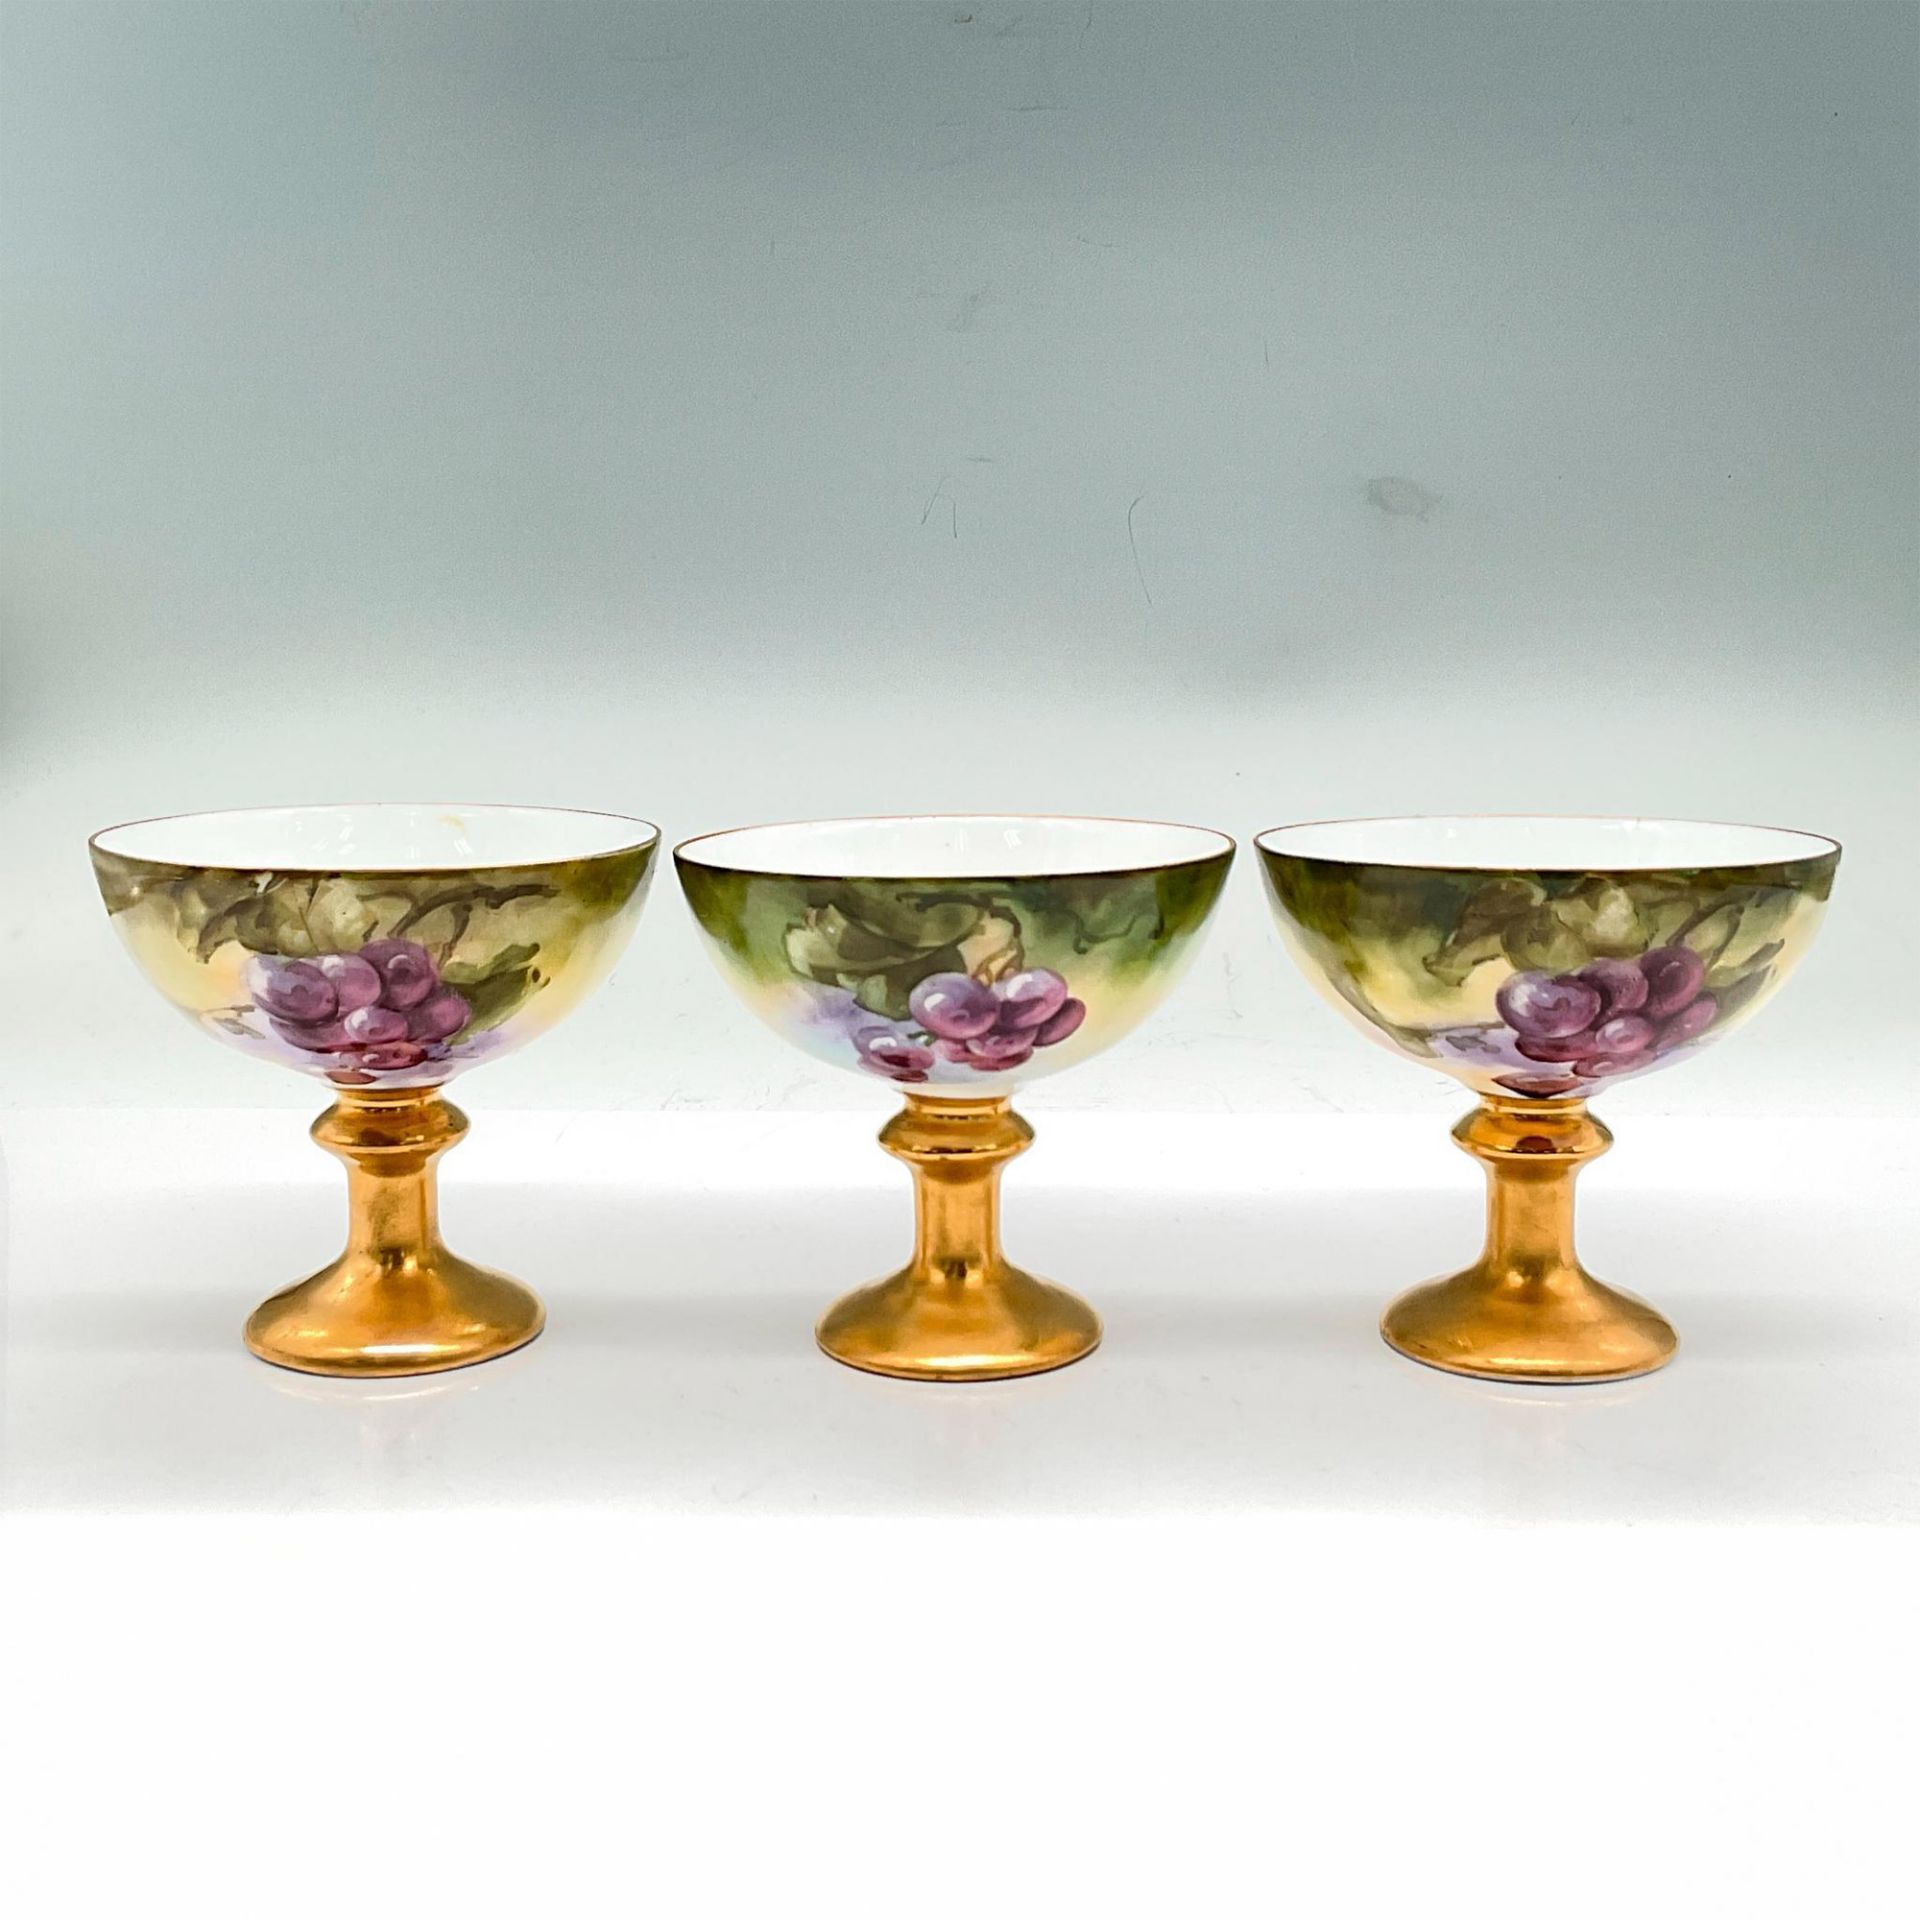 P&P Limoges Porcelain Pitcher, Grapes - Image 6 of 7